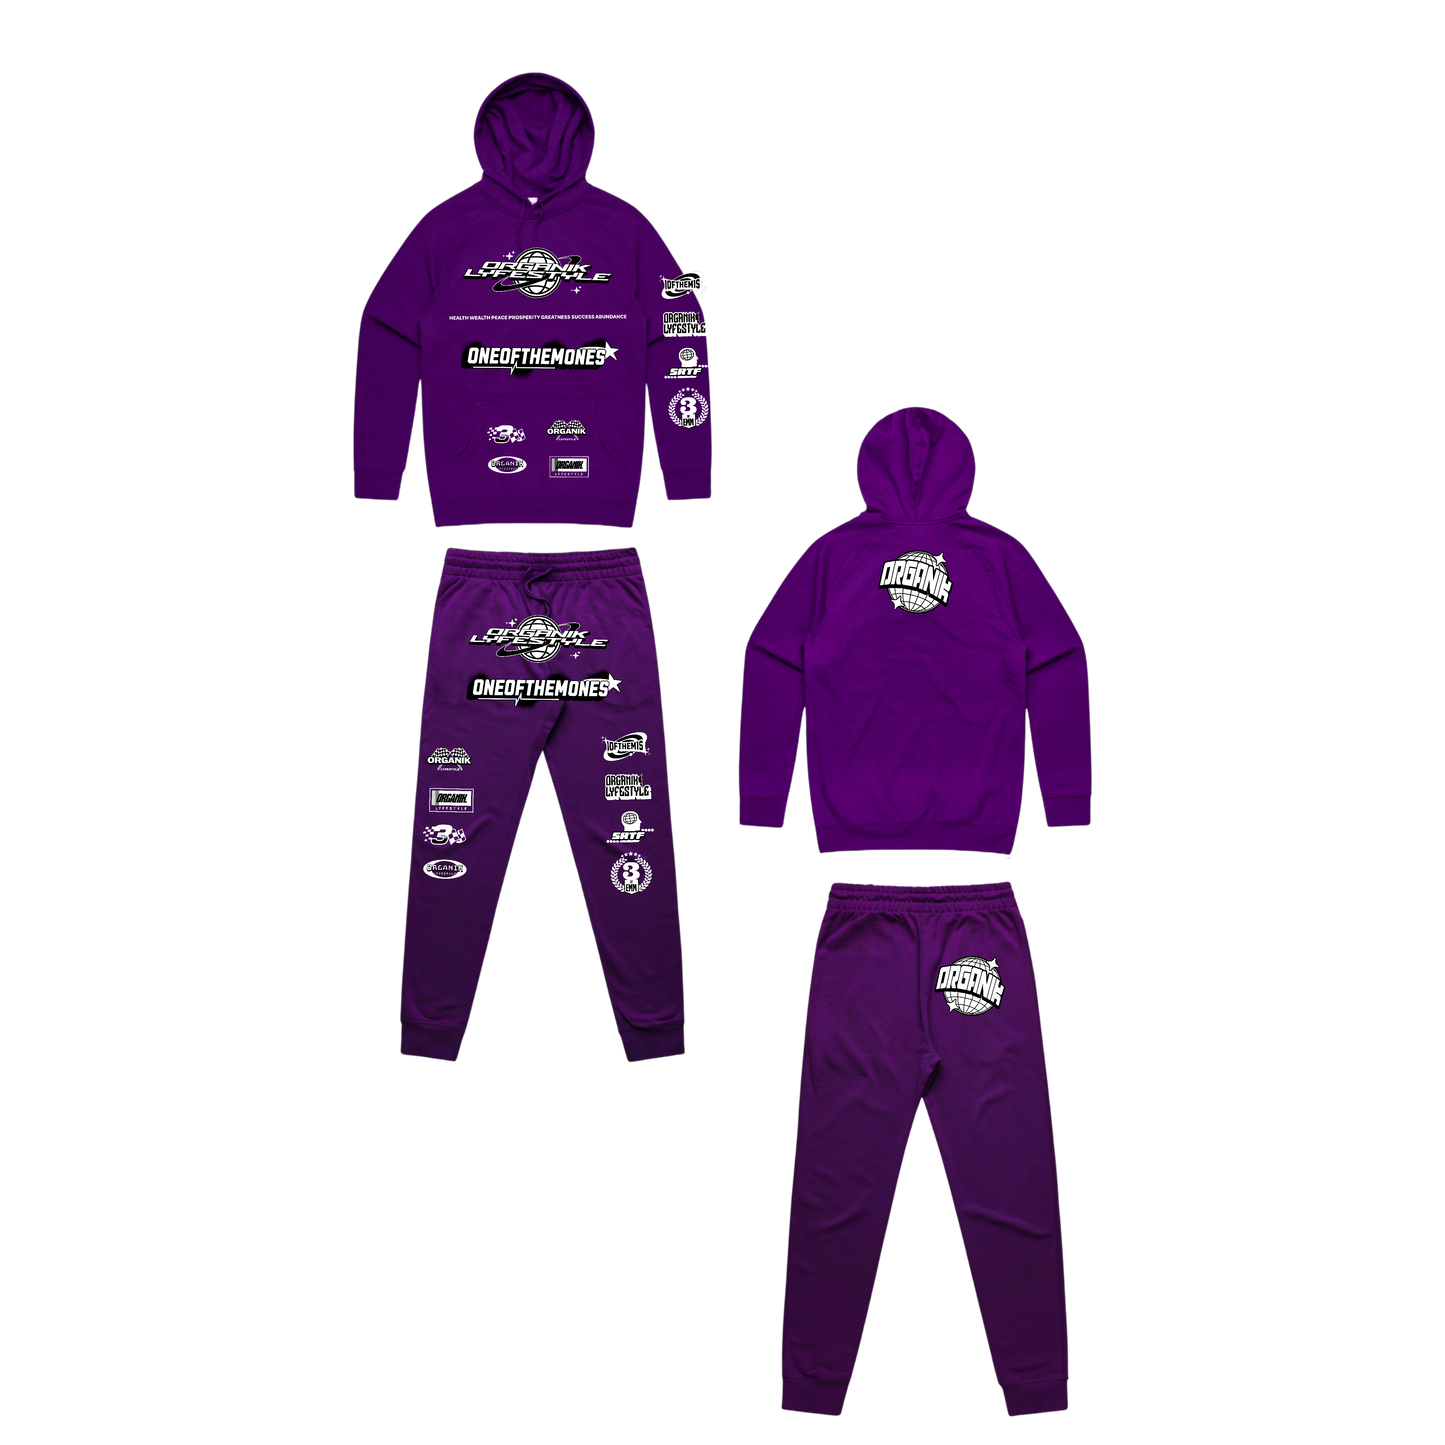 Organik Lyfestyle - Organik Sponsorship Set - Purple